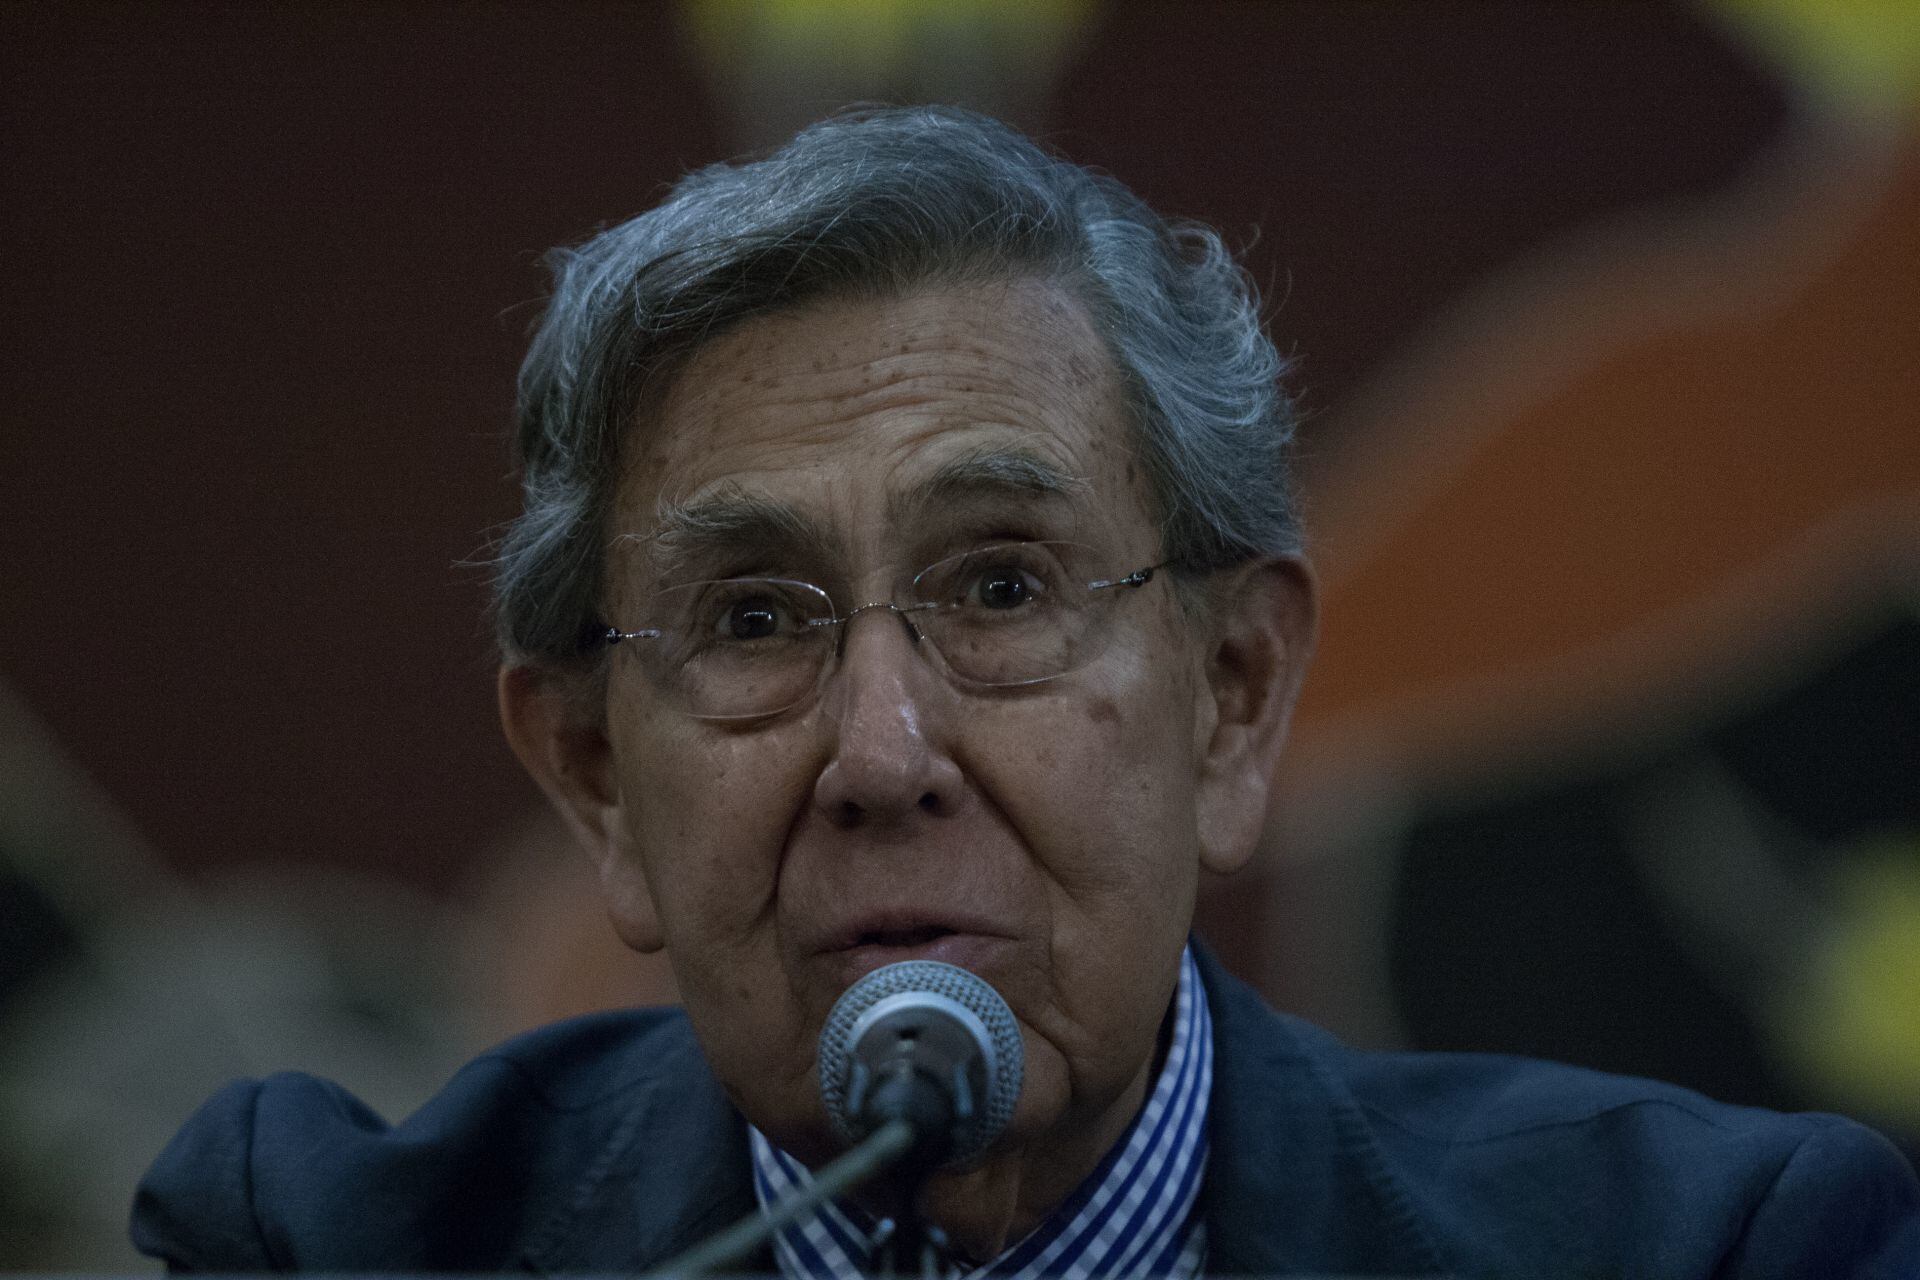 Revocación de mandato, un ‘ejercicio inútil’: Cuauhtémoc Cárdenas